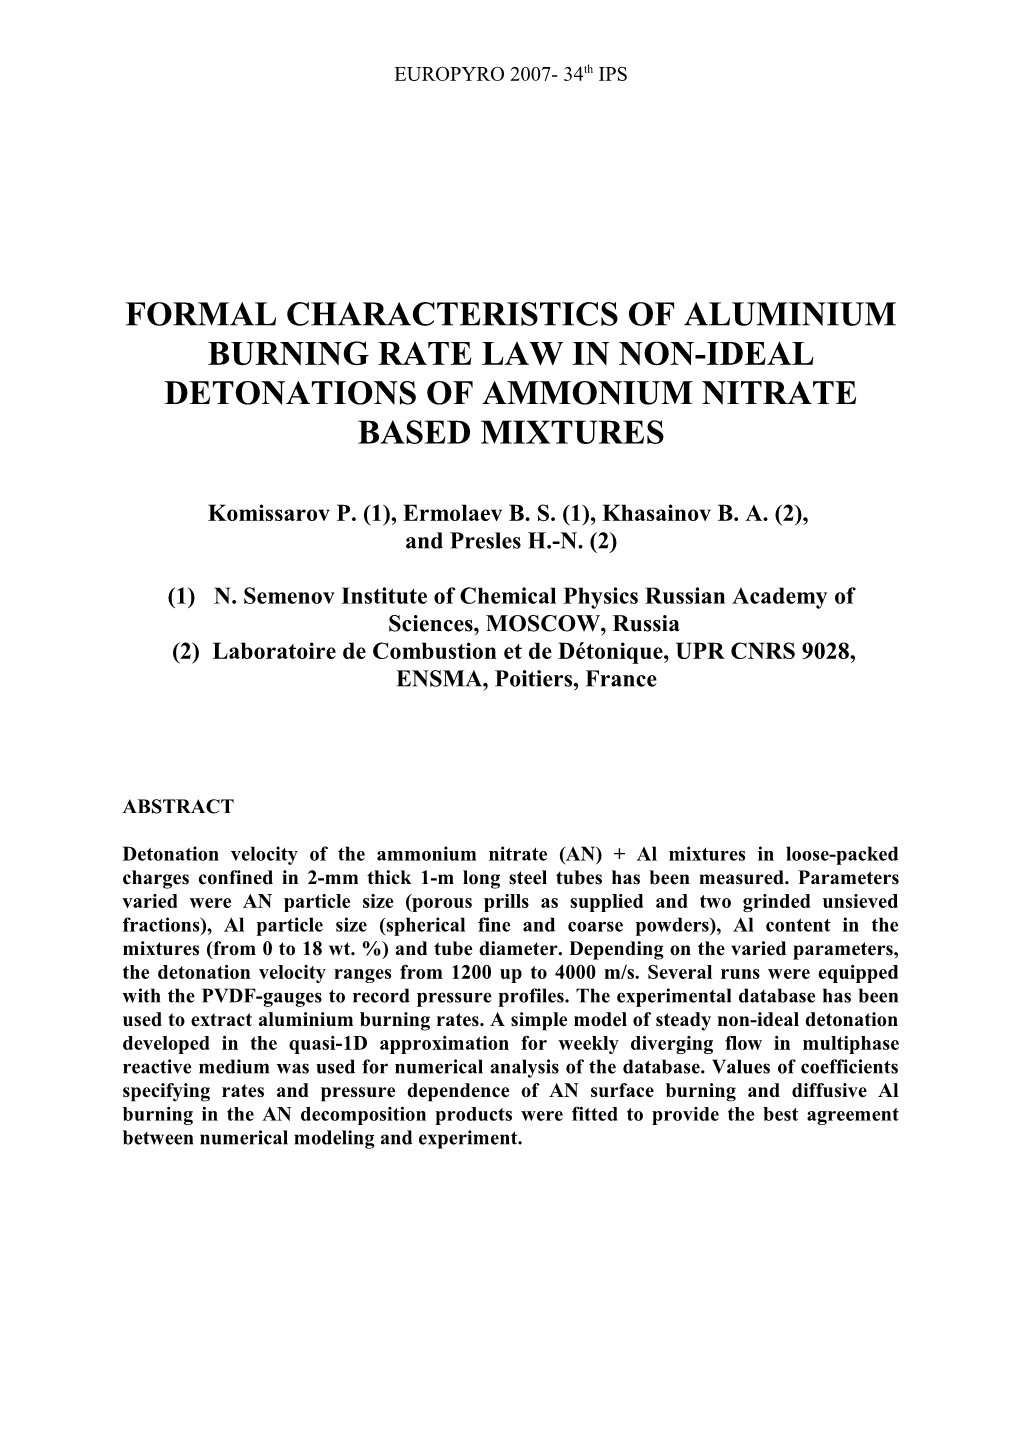 Formal Characteristics of Aluminium Burning Rate Law in Non-Ideal Detonations of Ammonium